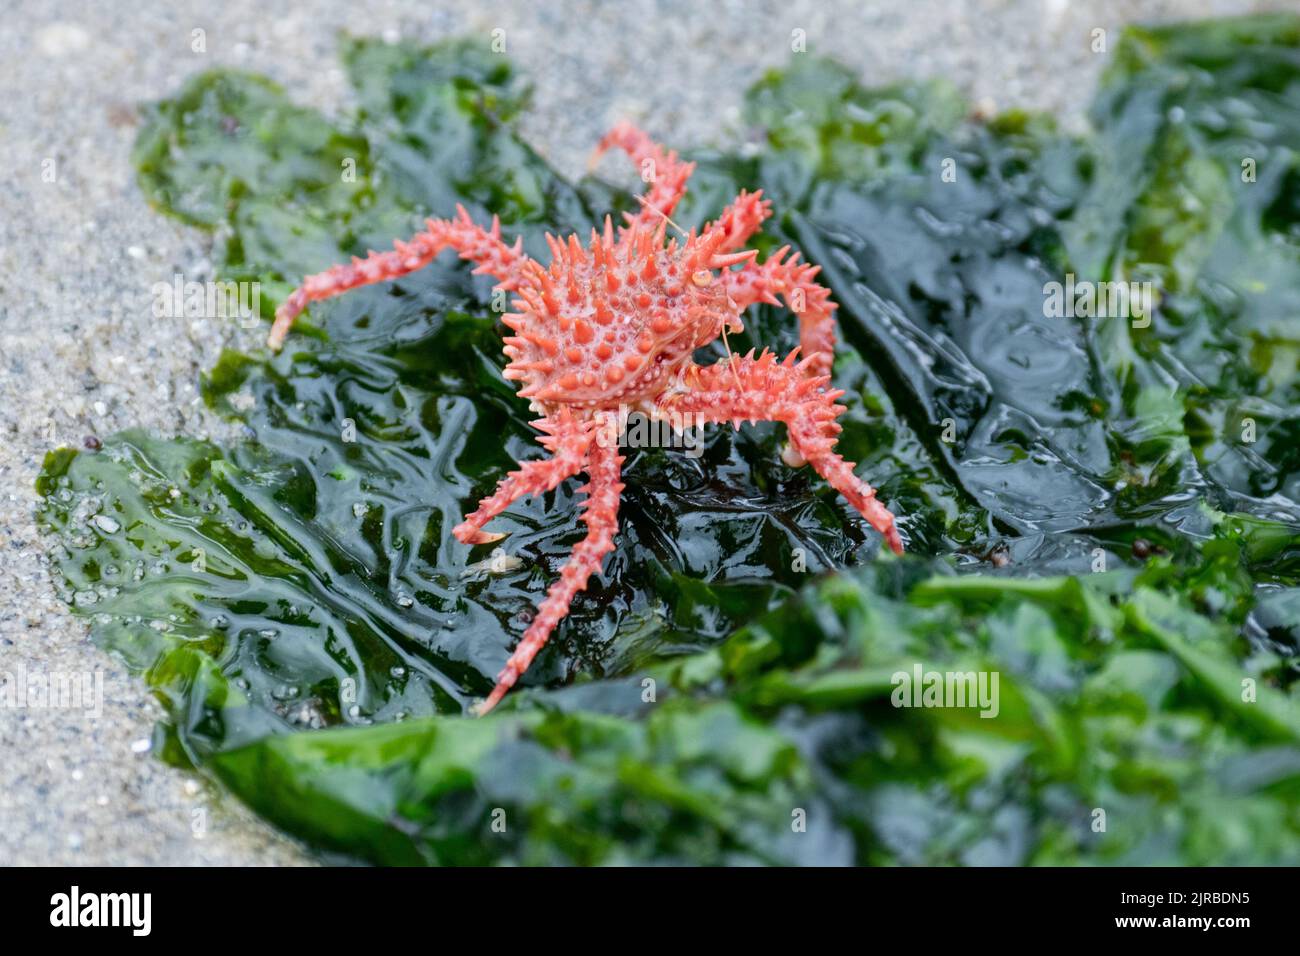 USA, SE Alaska, Inside Passage, Wood Spit. Young red king crab aka Alaska king crab (Paralithodes camtschaticus) on common sea lettuce seaweed. Stock Photo